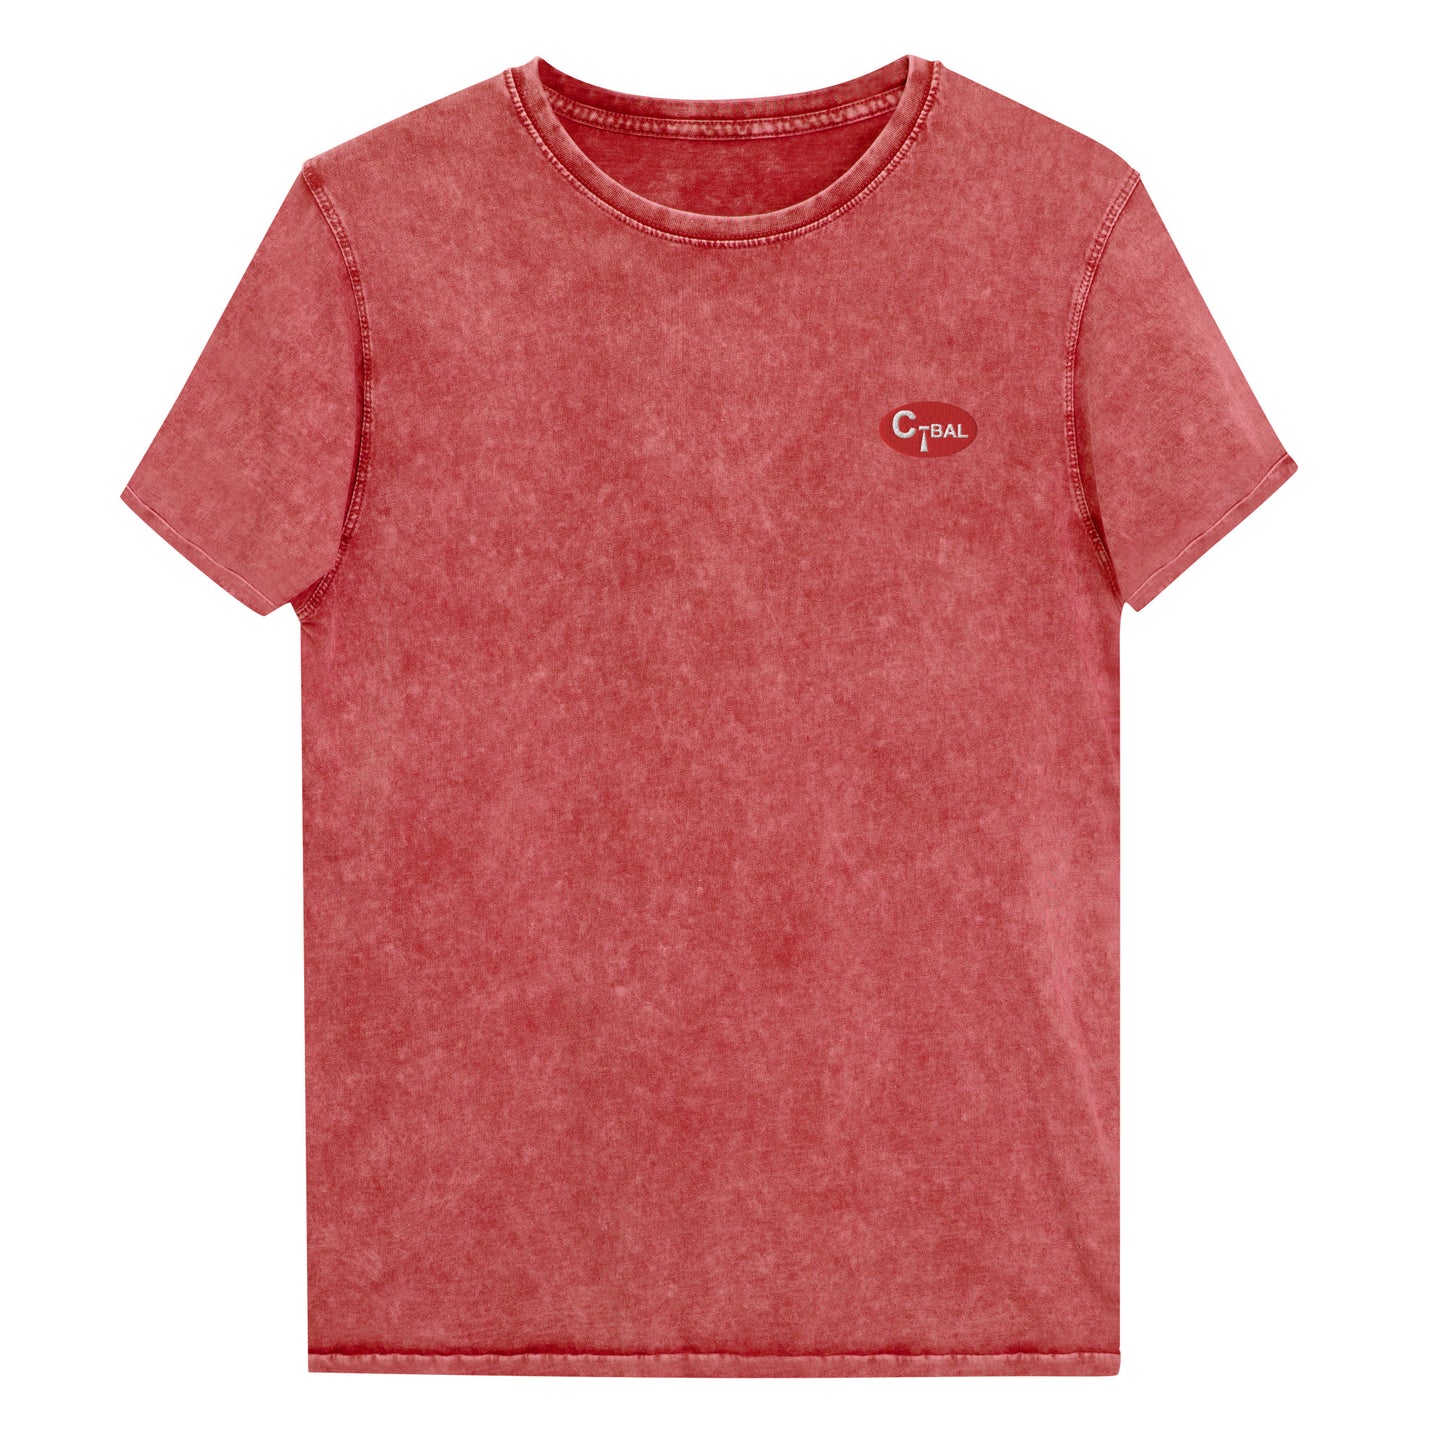 B002 - Denim T-shirt (C-BAL : Red / Embroidery Logo)